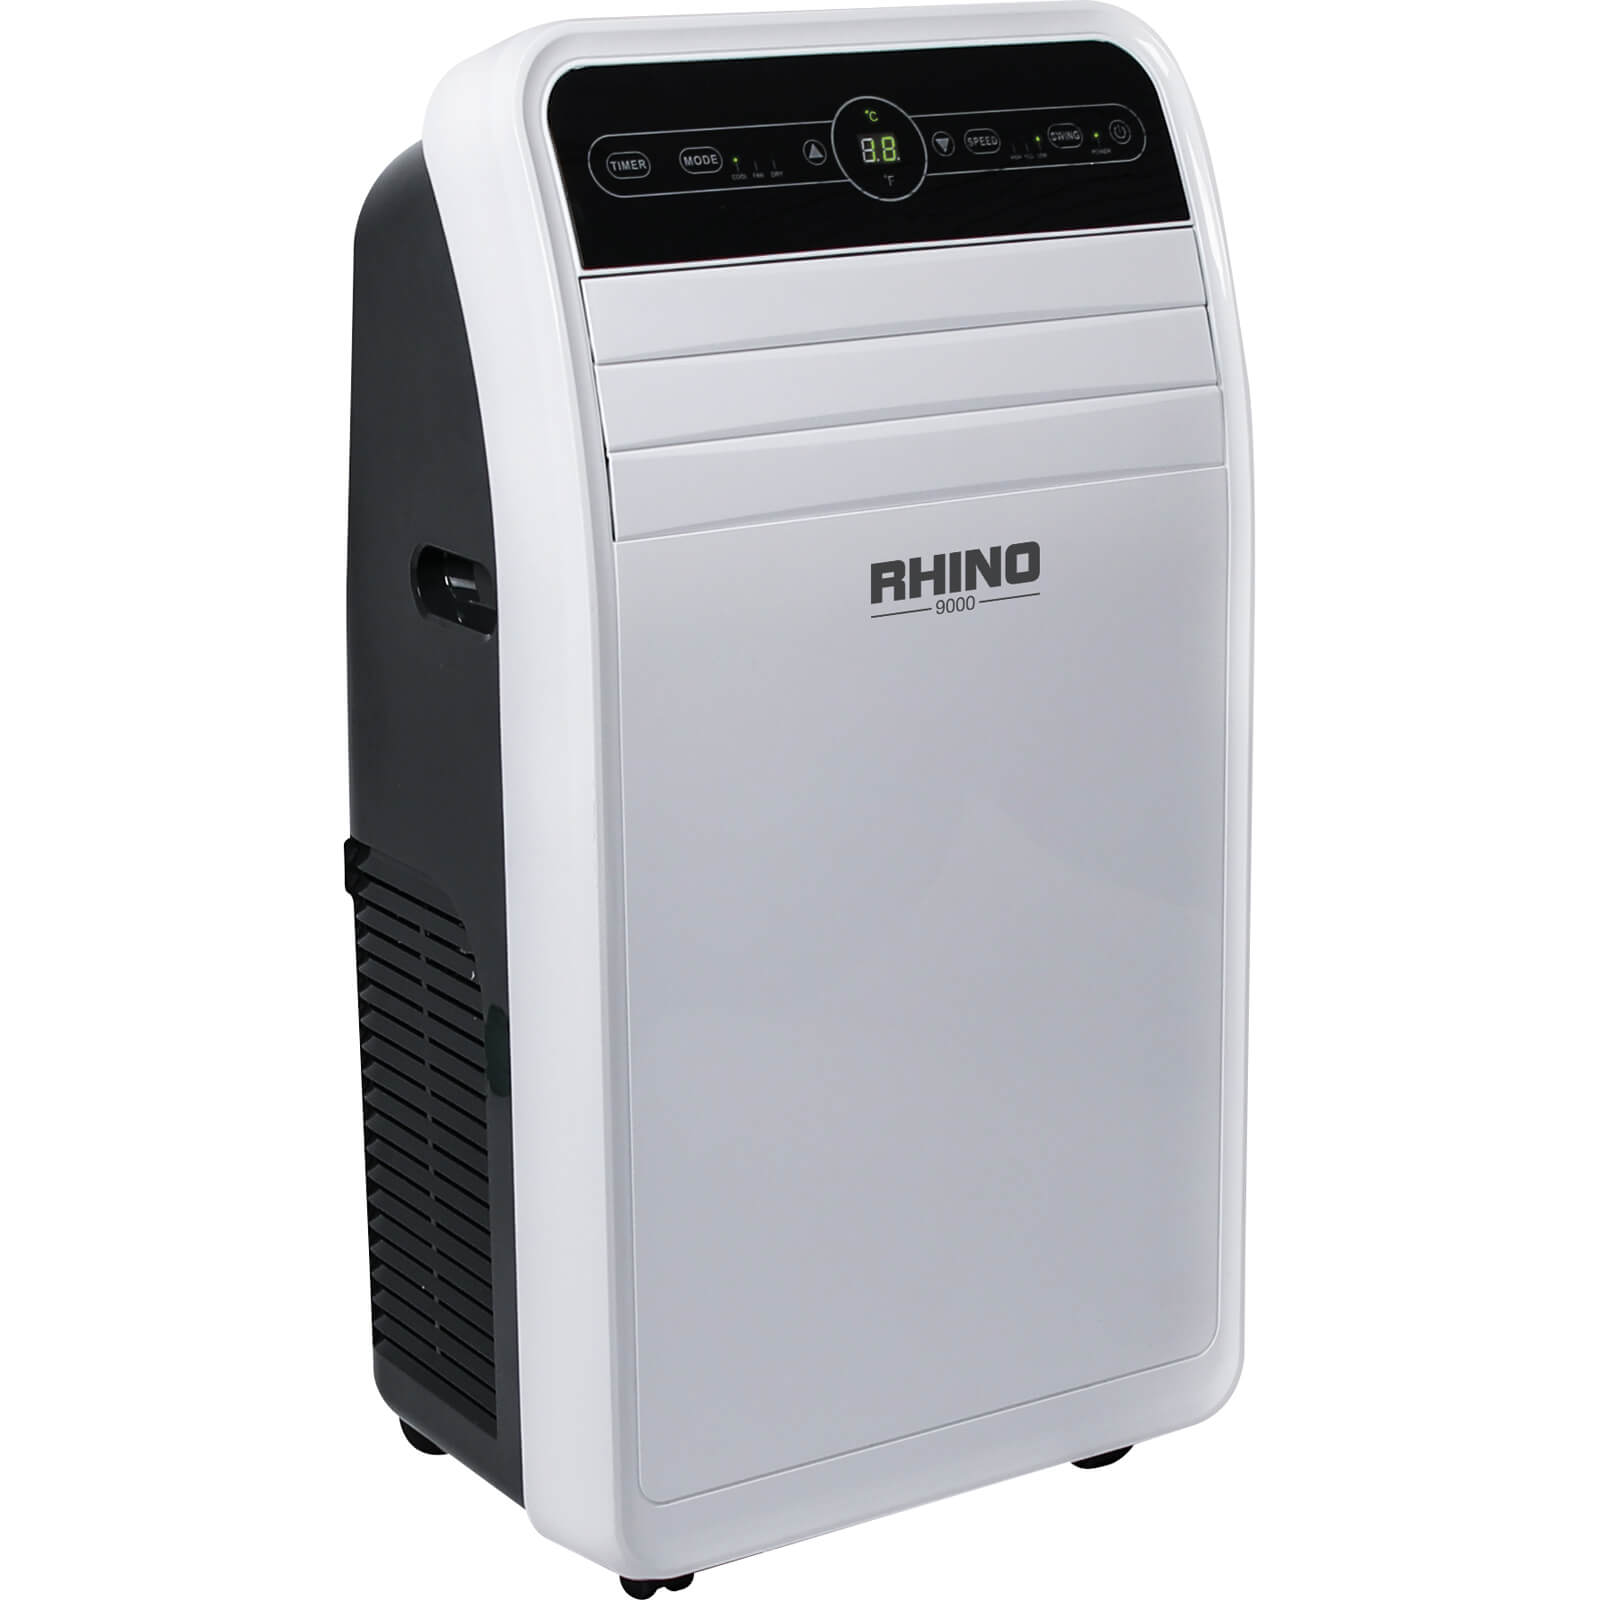 Photos - Fan Rhino AC9000 Portable Air Conditioning Unit H03620 